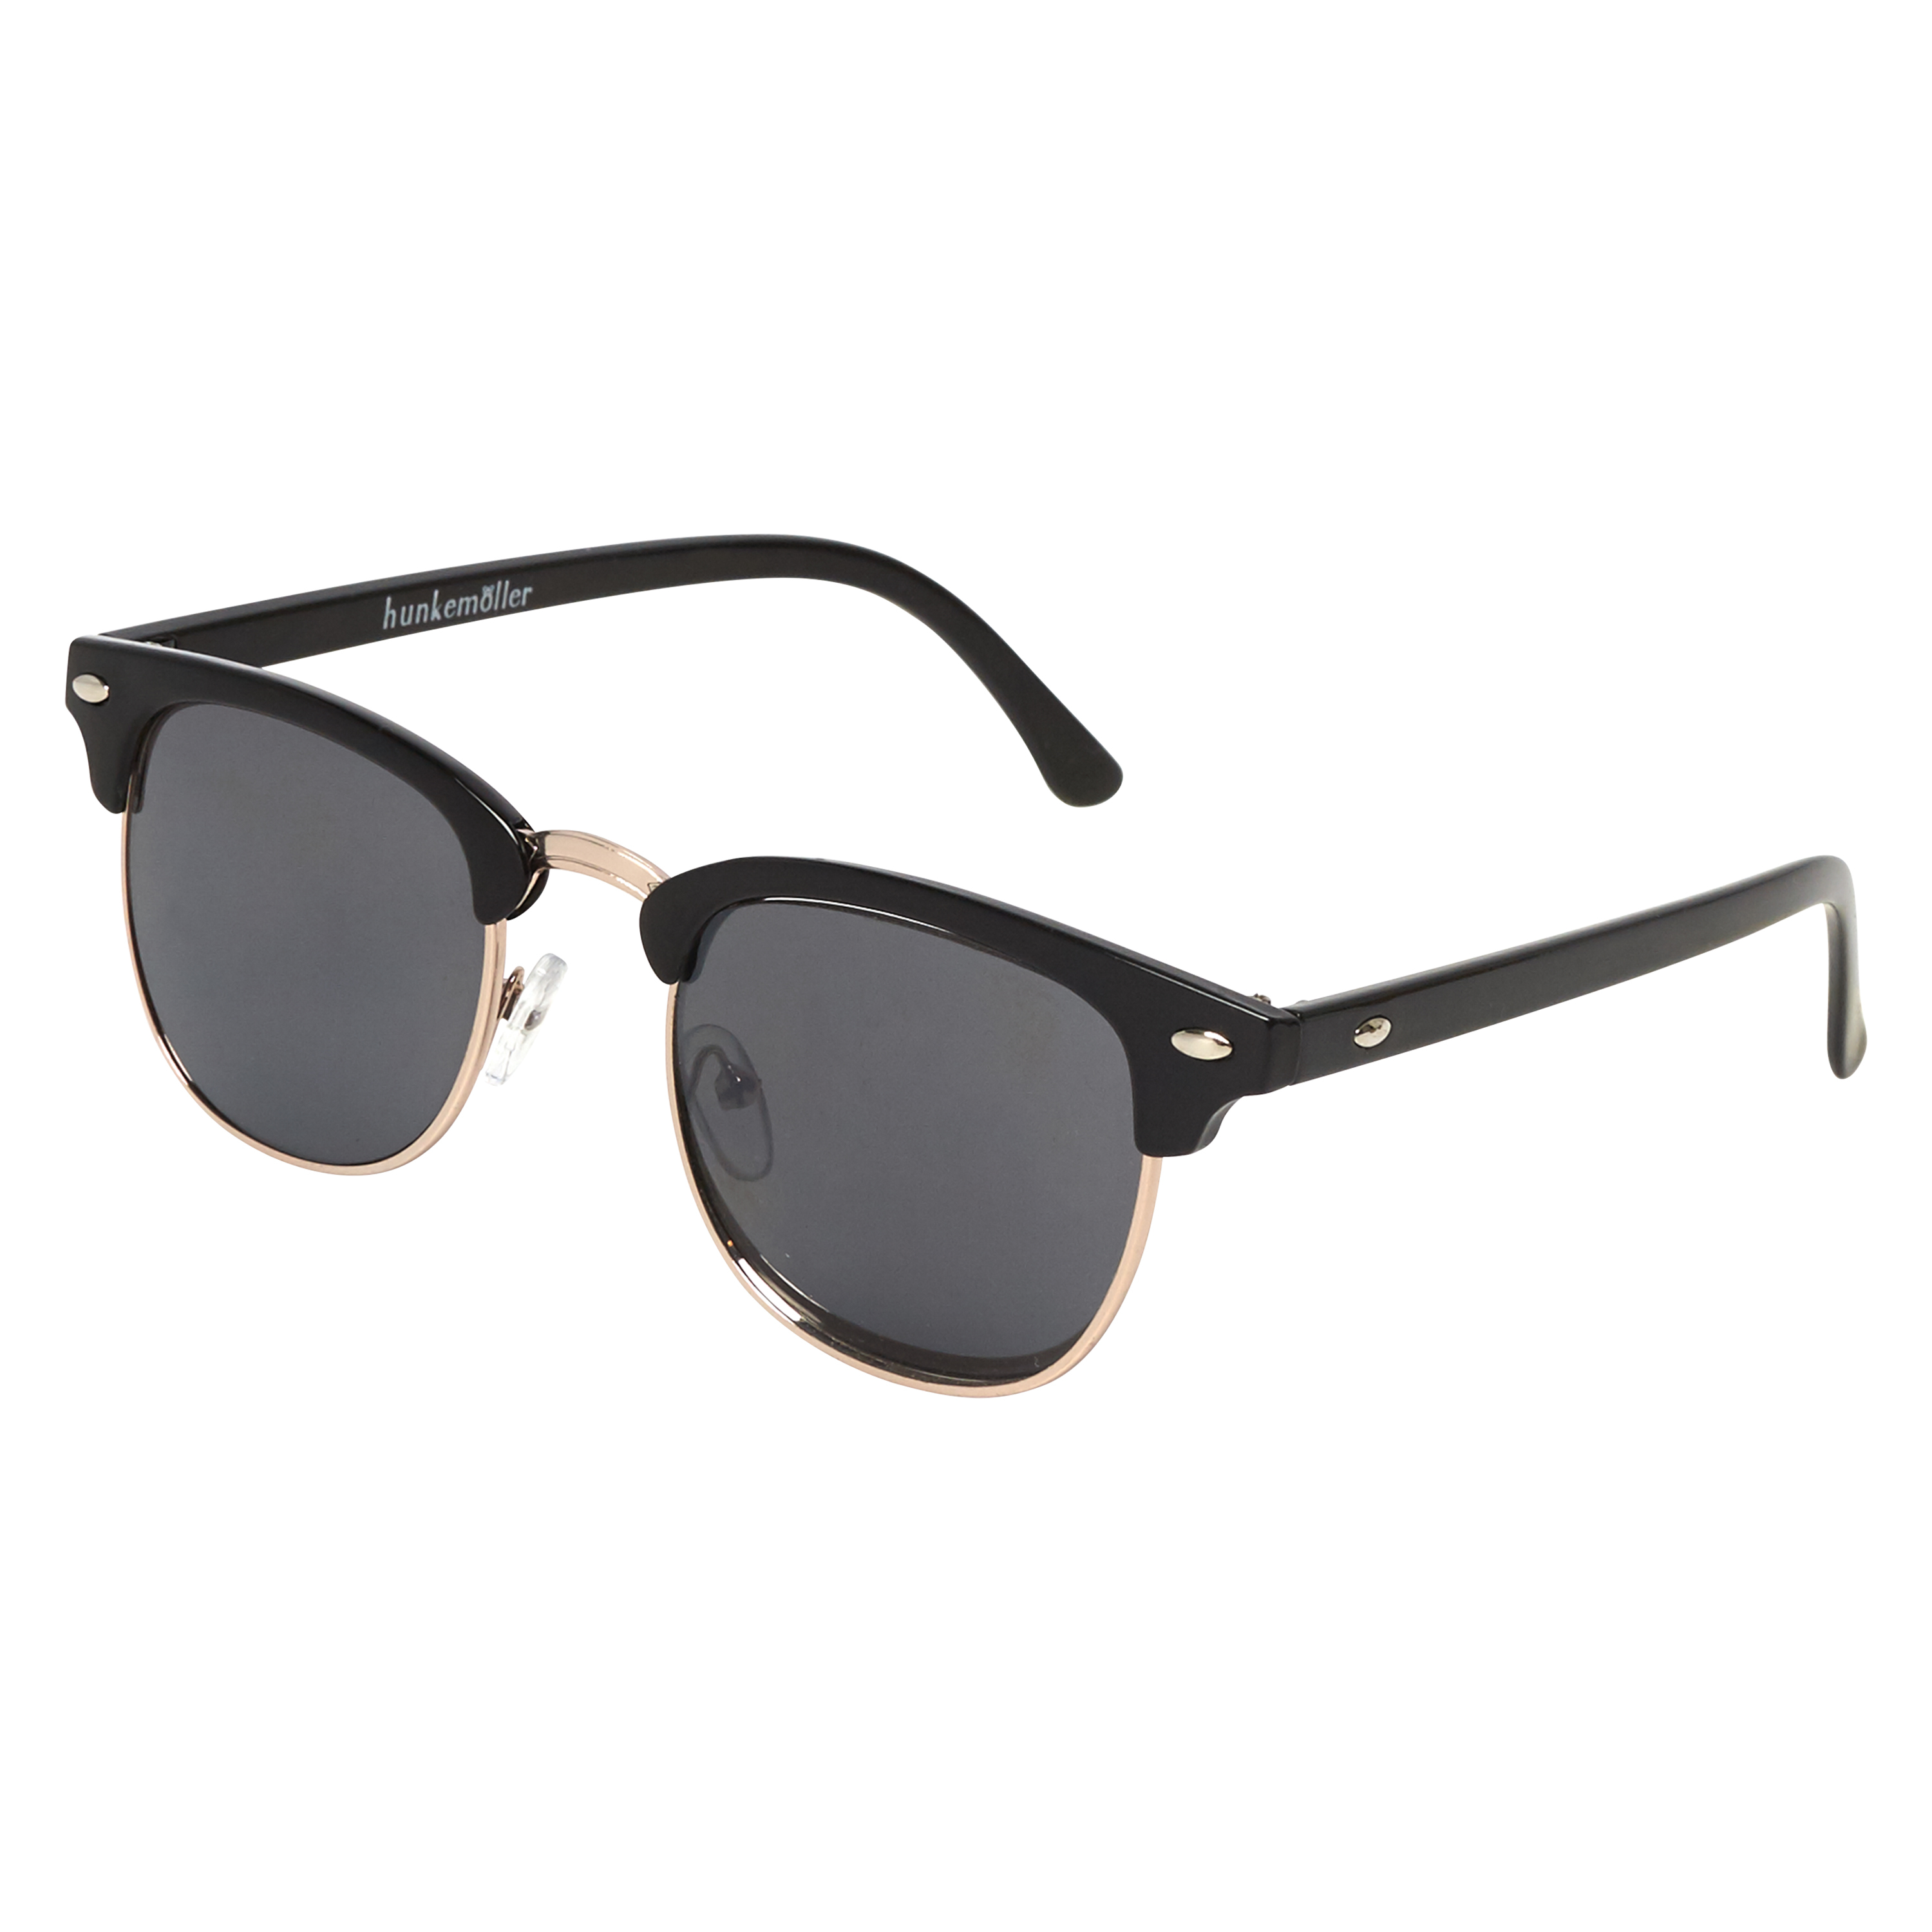 Club Master Sunglasses, Black, main